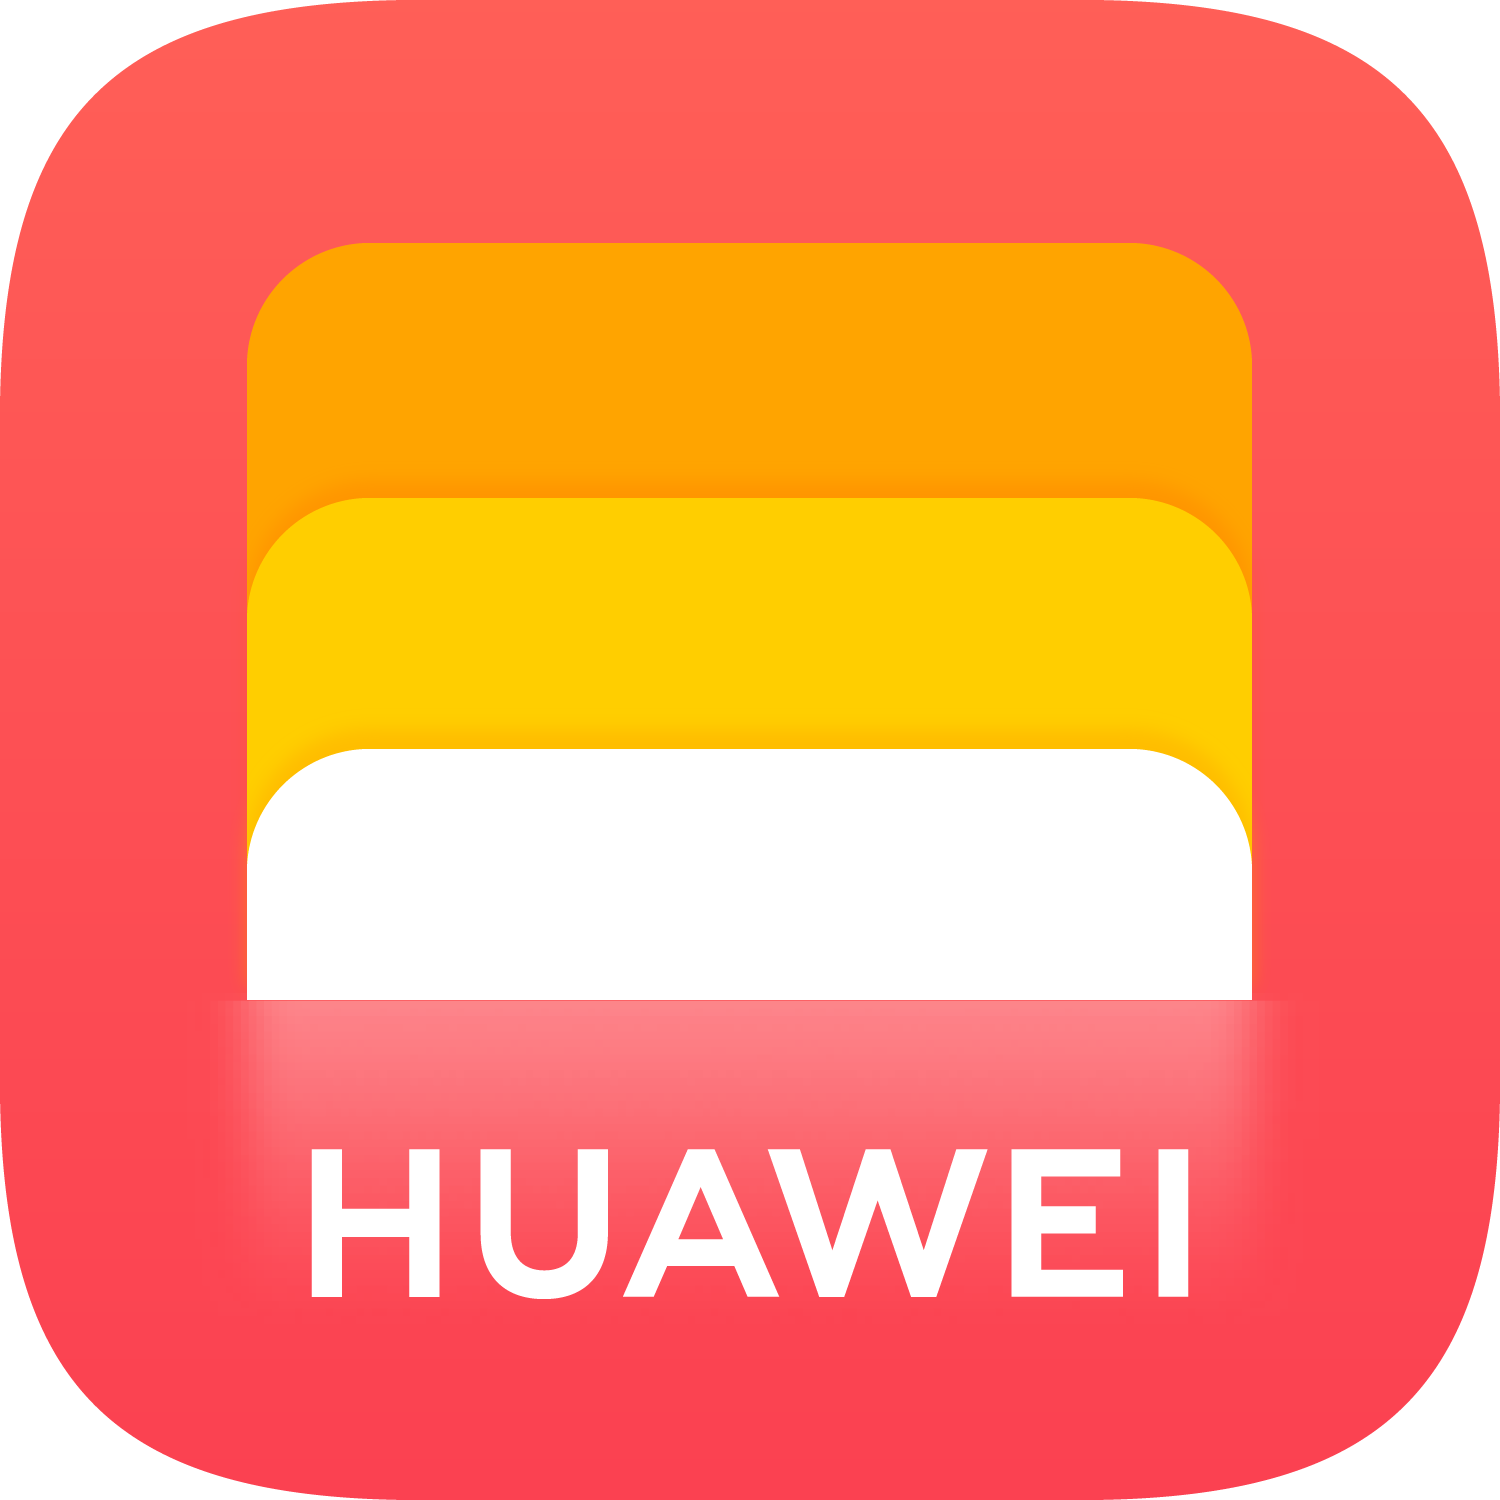 Huawei Wallet icon